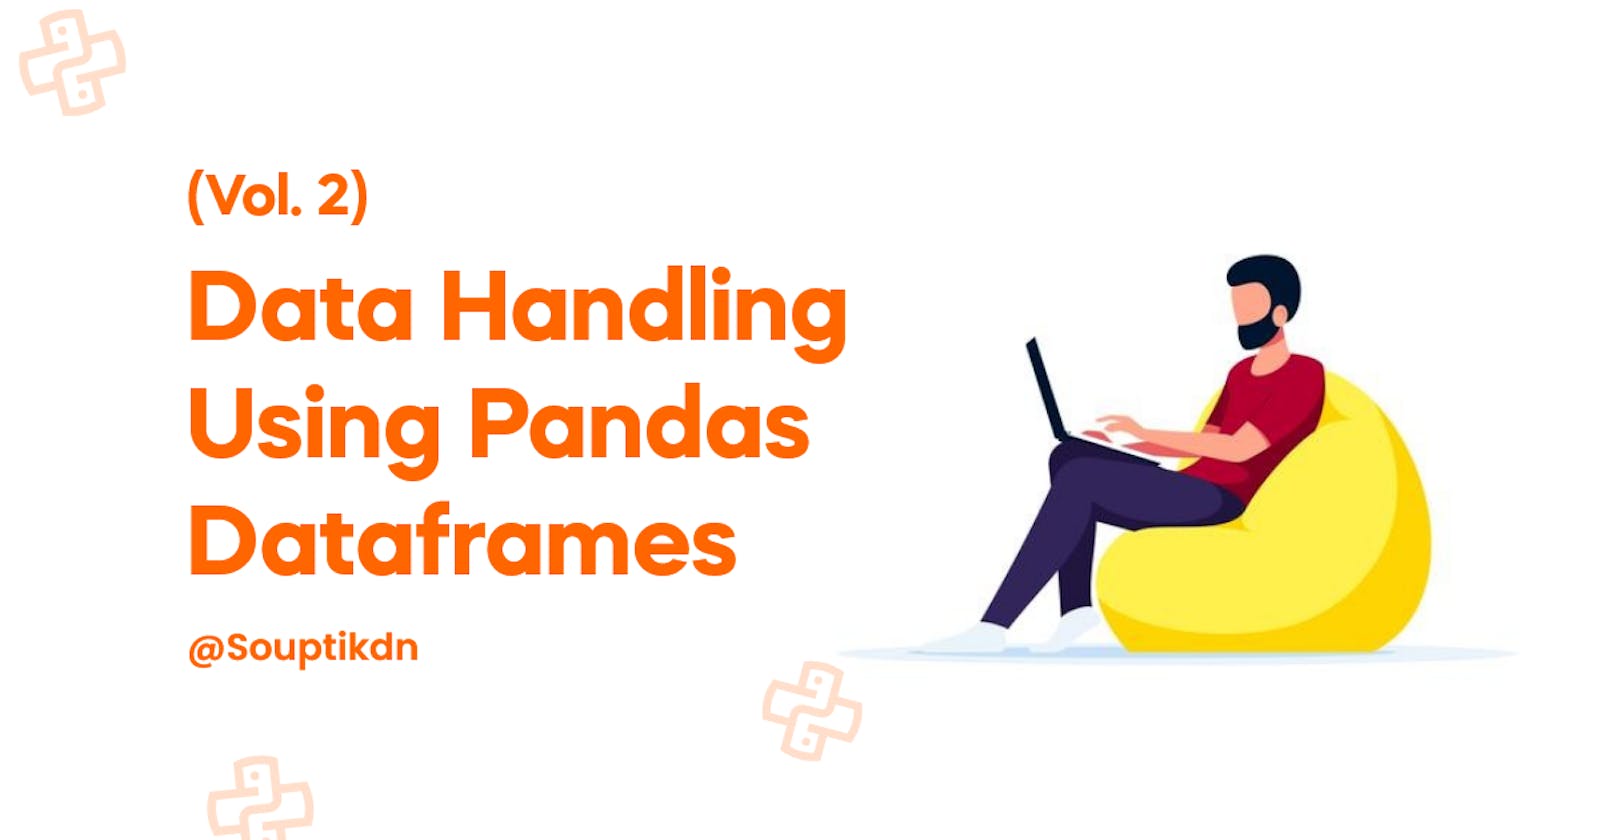 Data Handling Using Pandas - Dataframes #2 - vol. 2